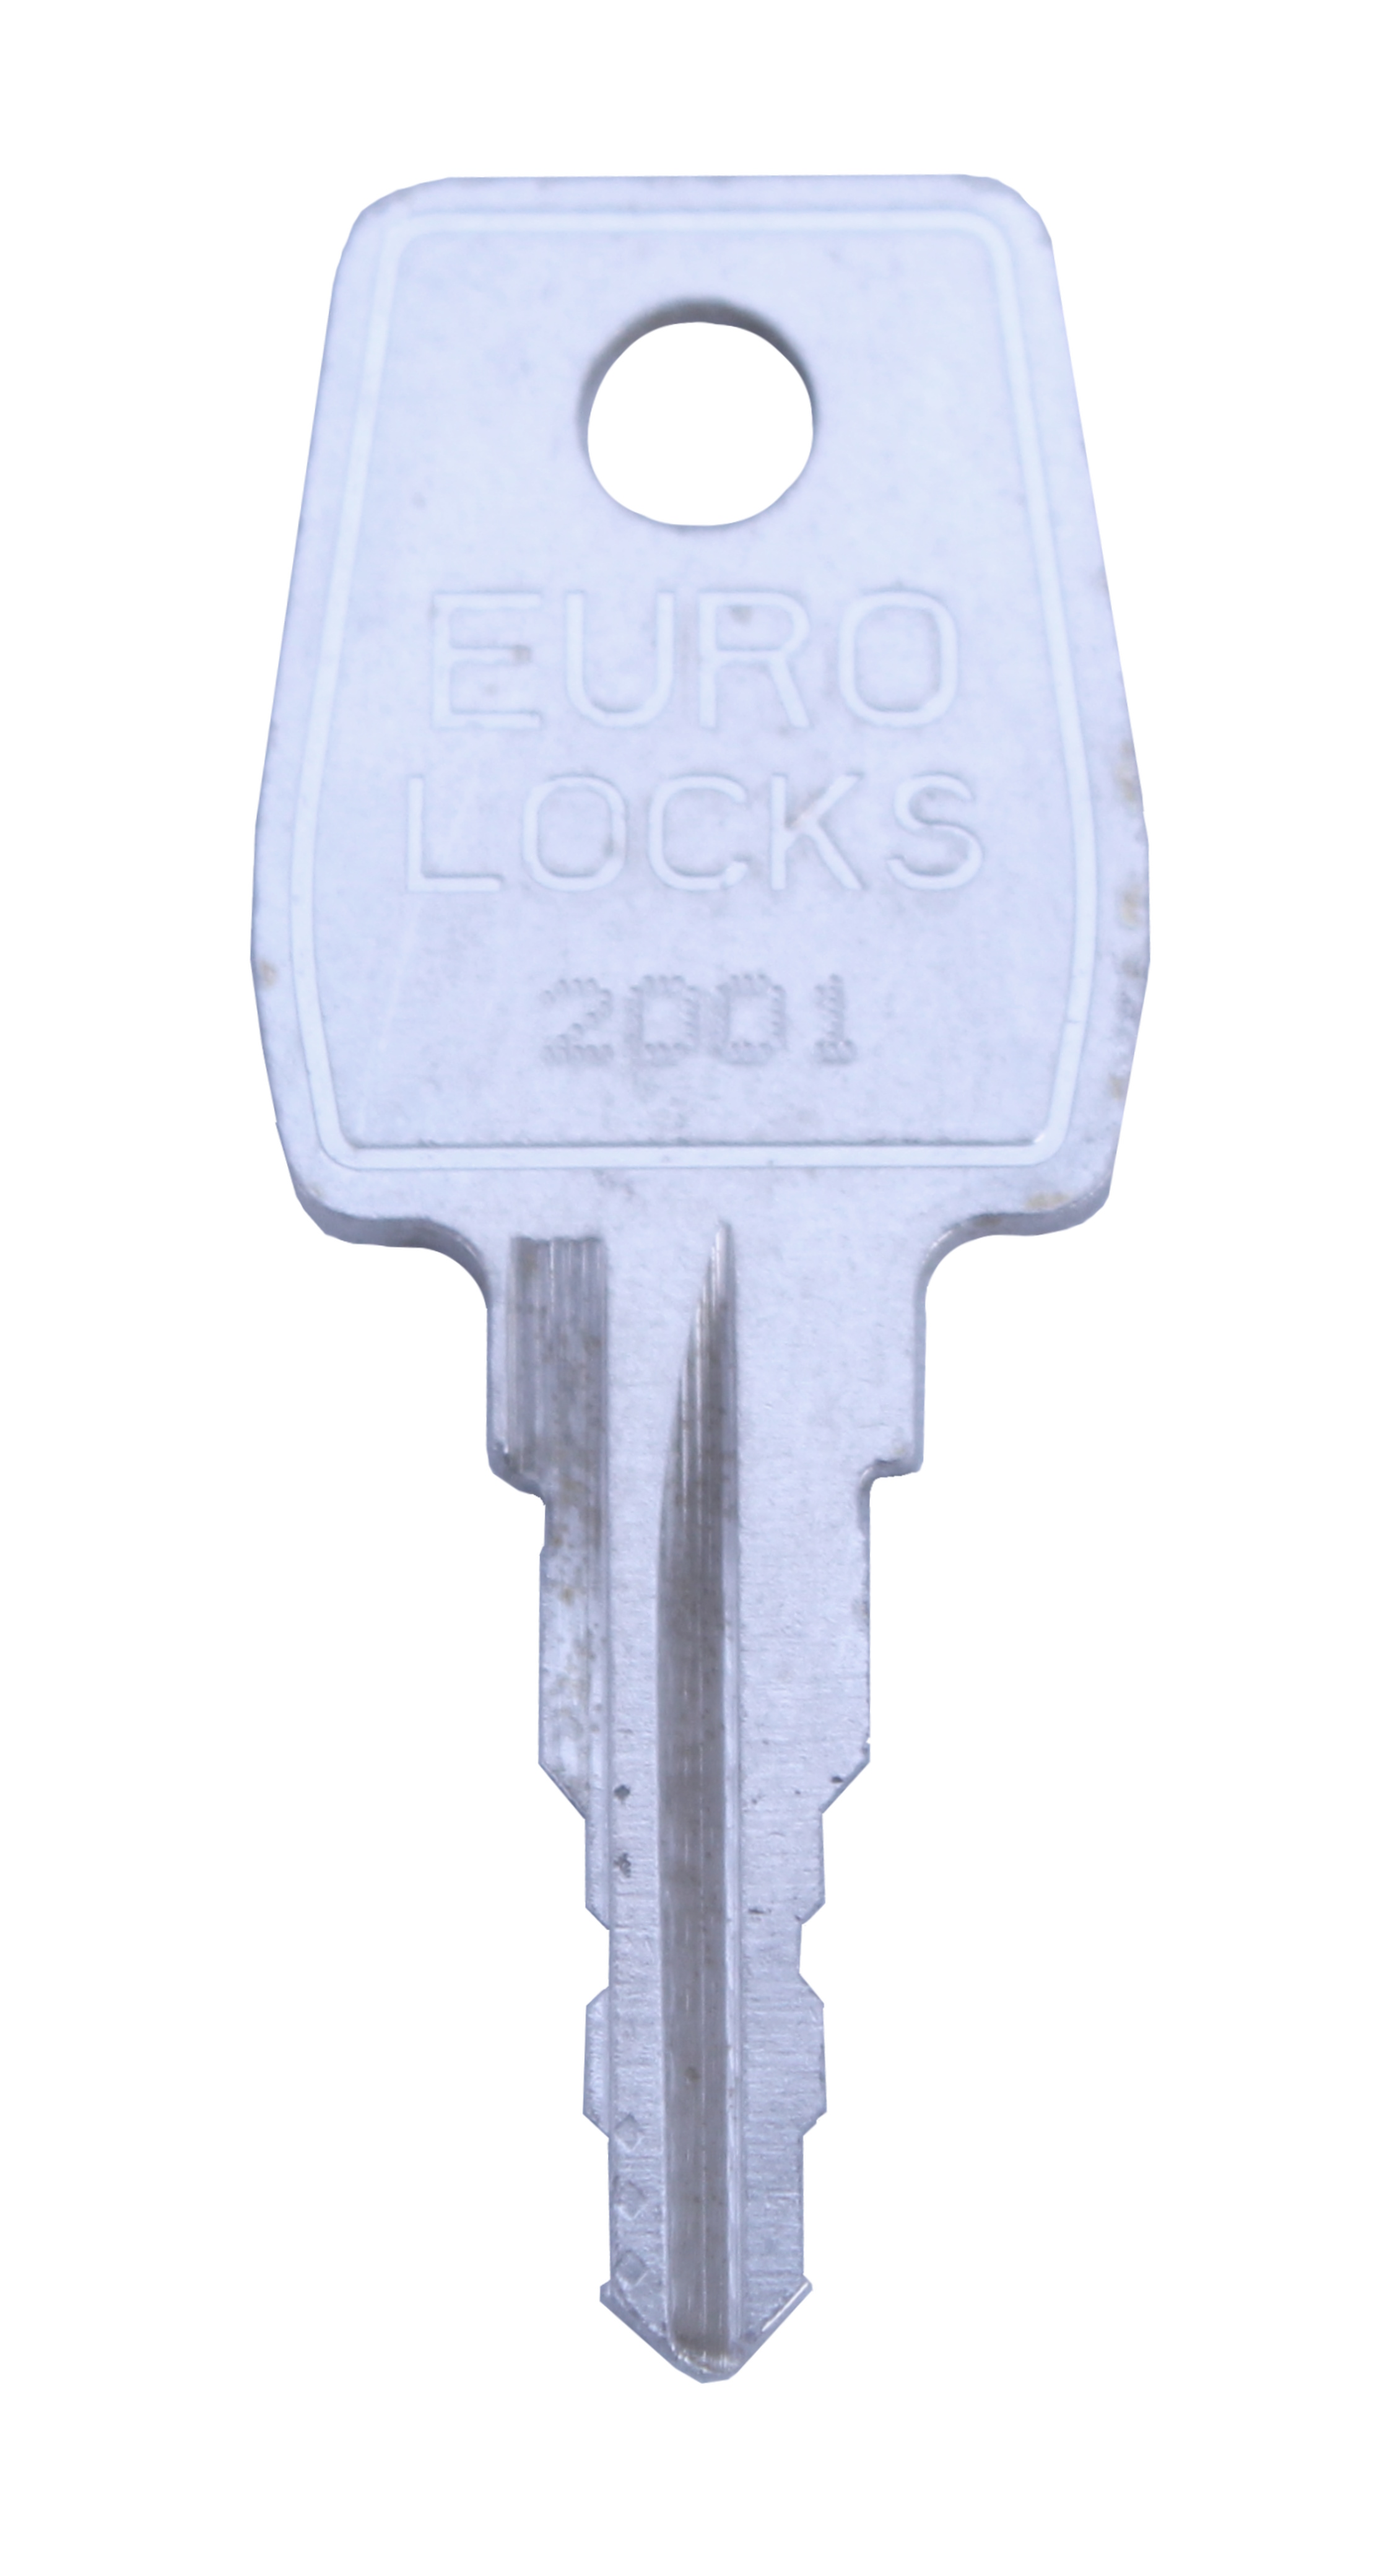 EUROLOCKS Schlüssel 2001